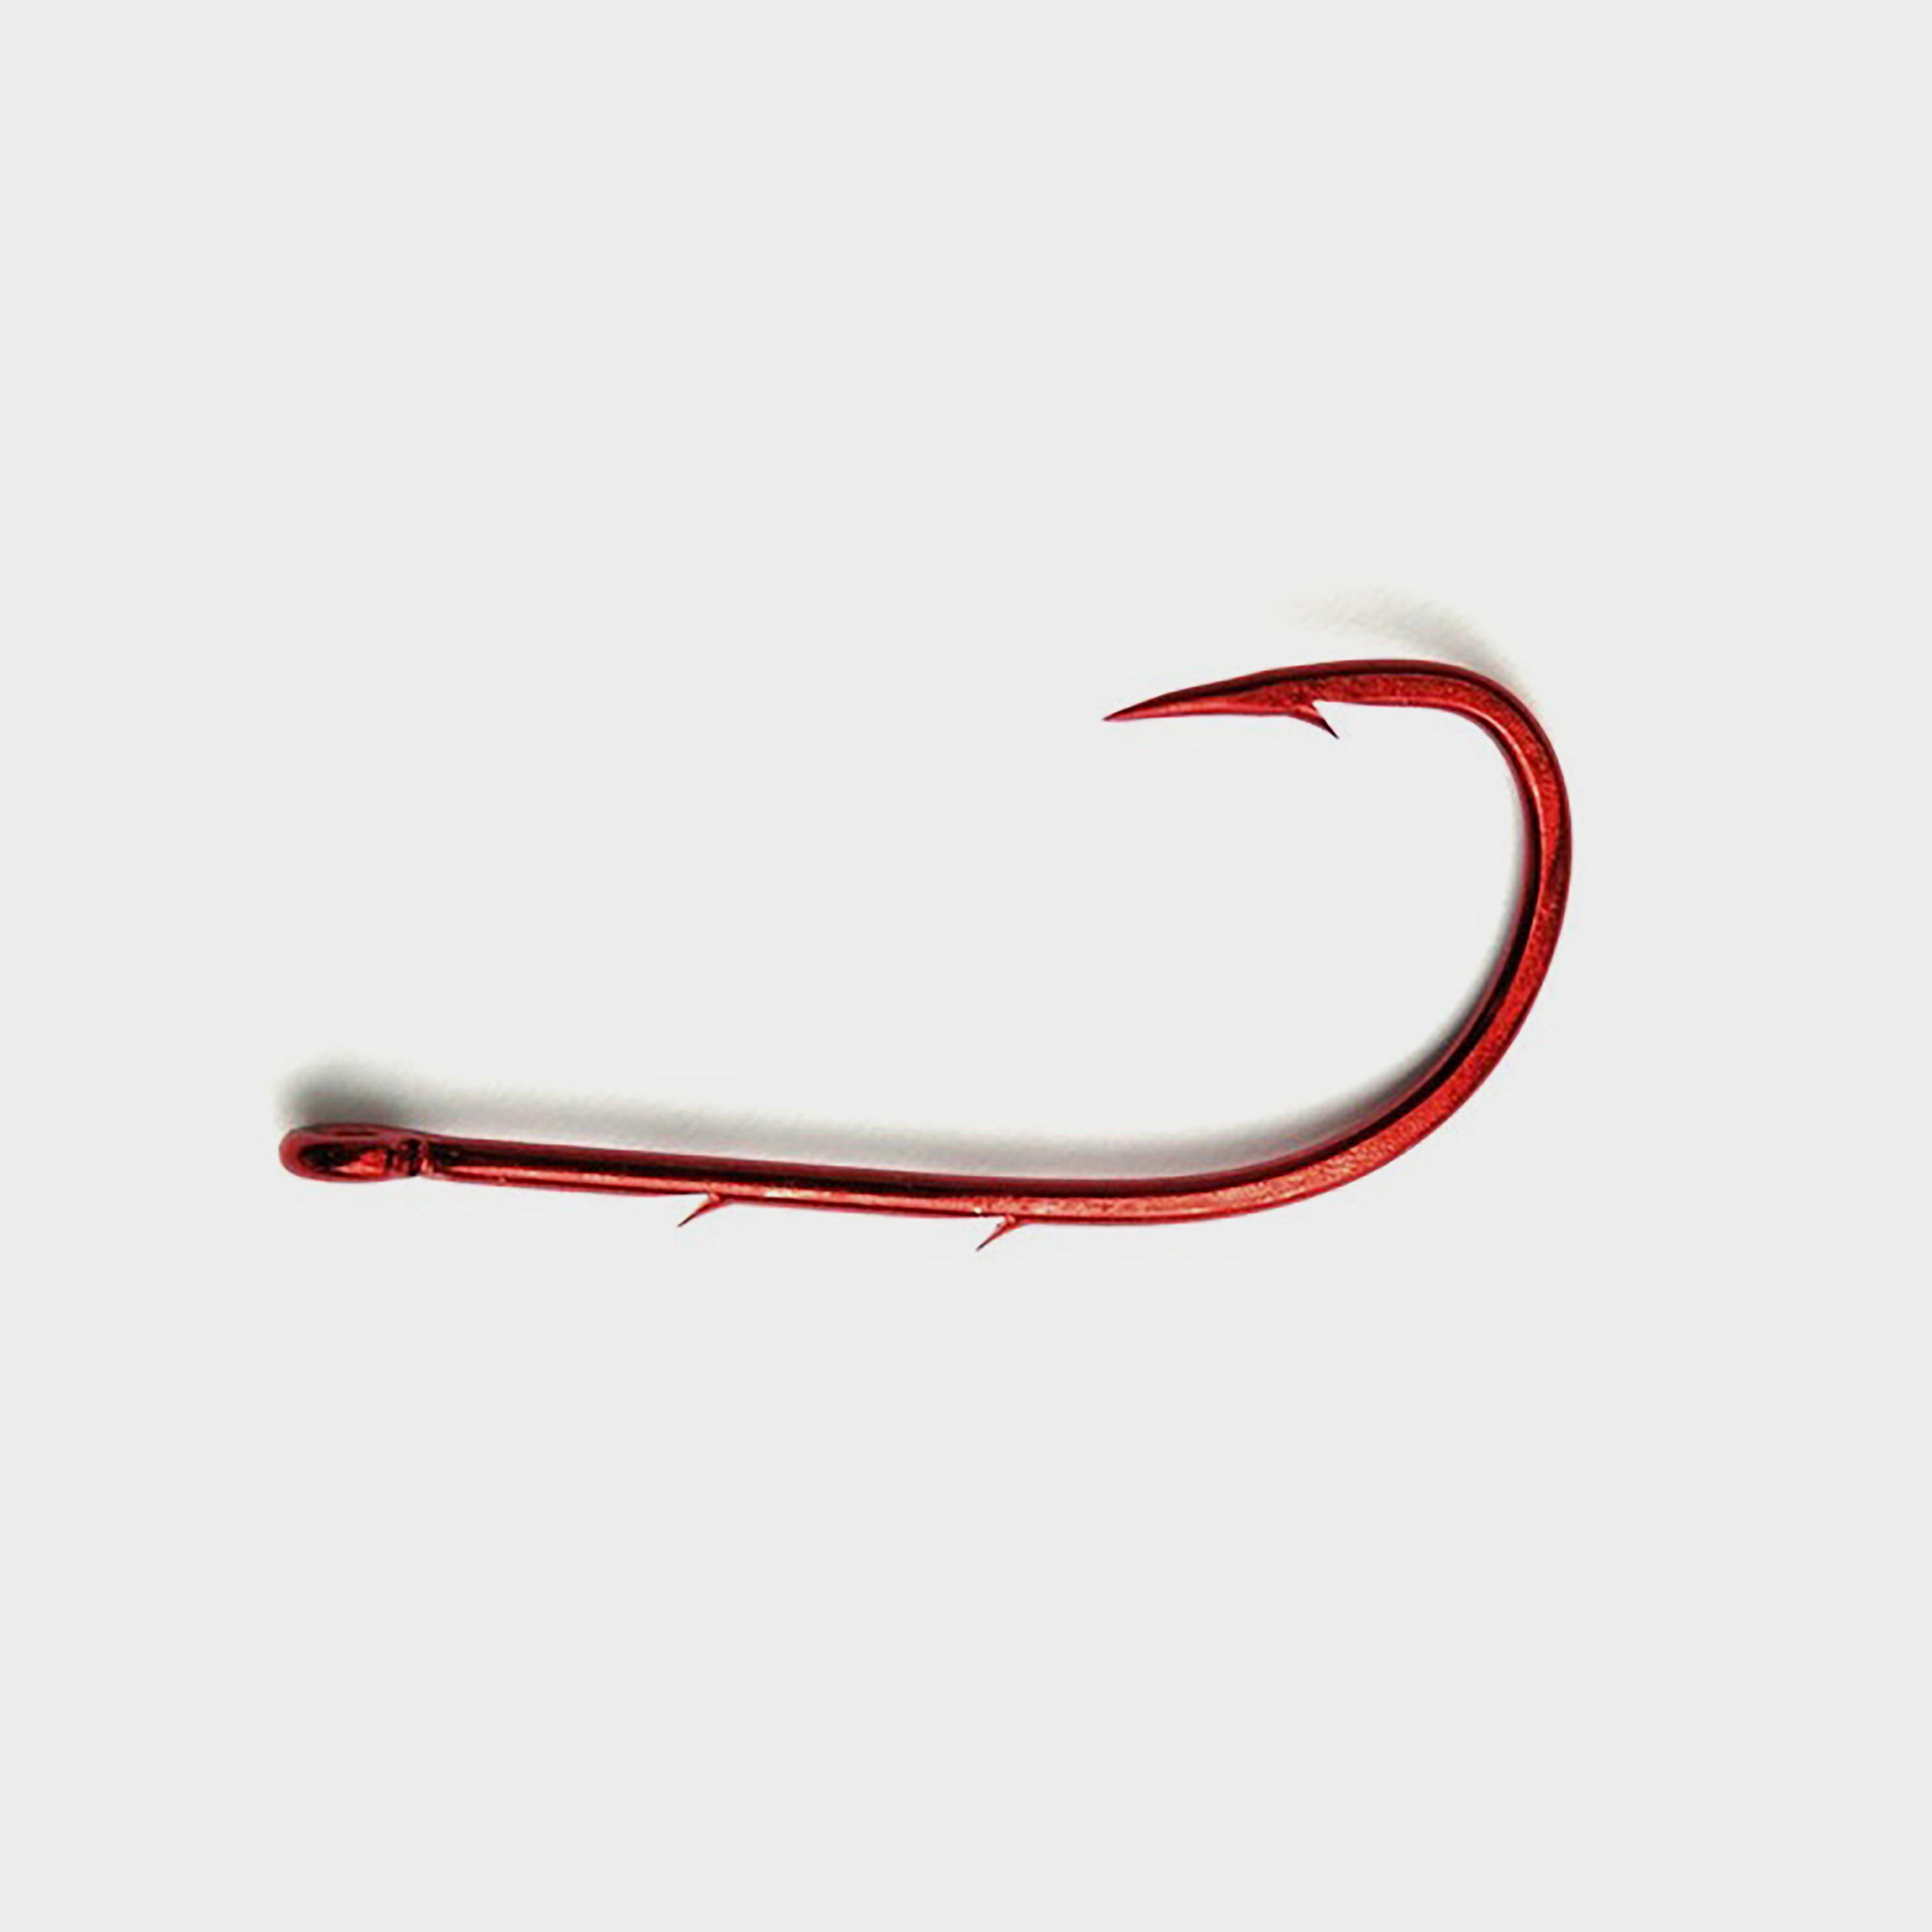 Photos - Fishing Hook / Jig Head Mustad Red Baitholder Size 1/0, Red 